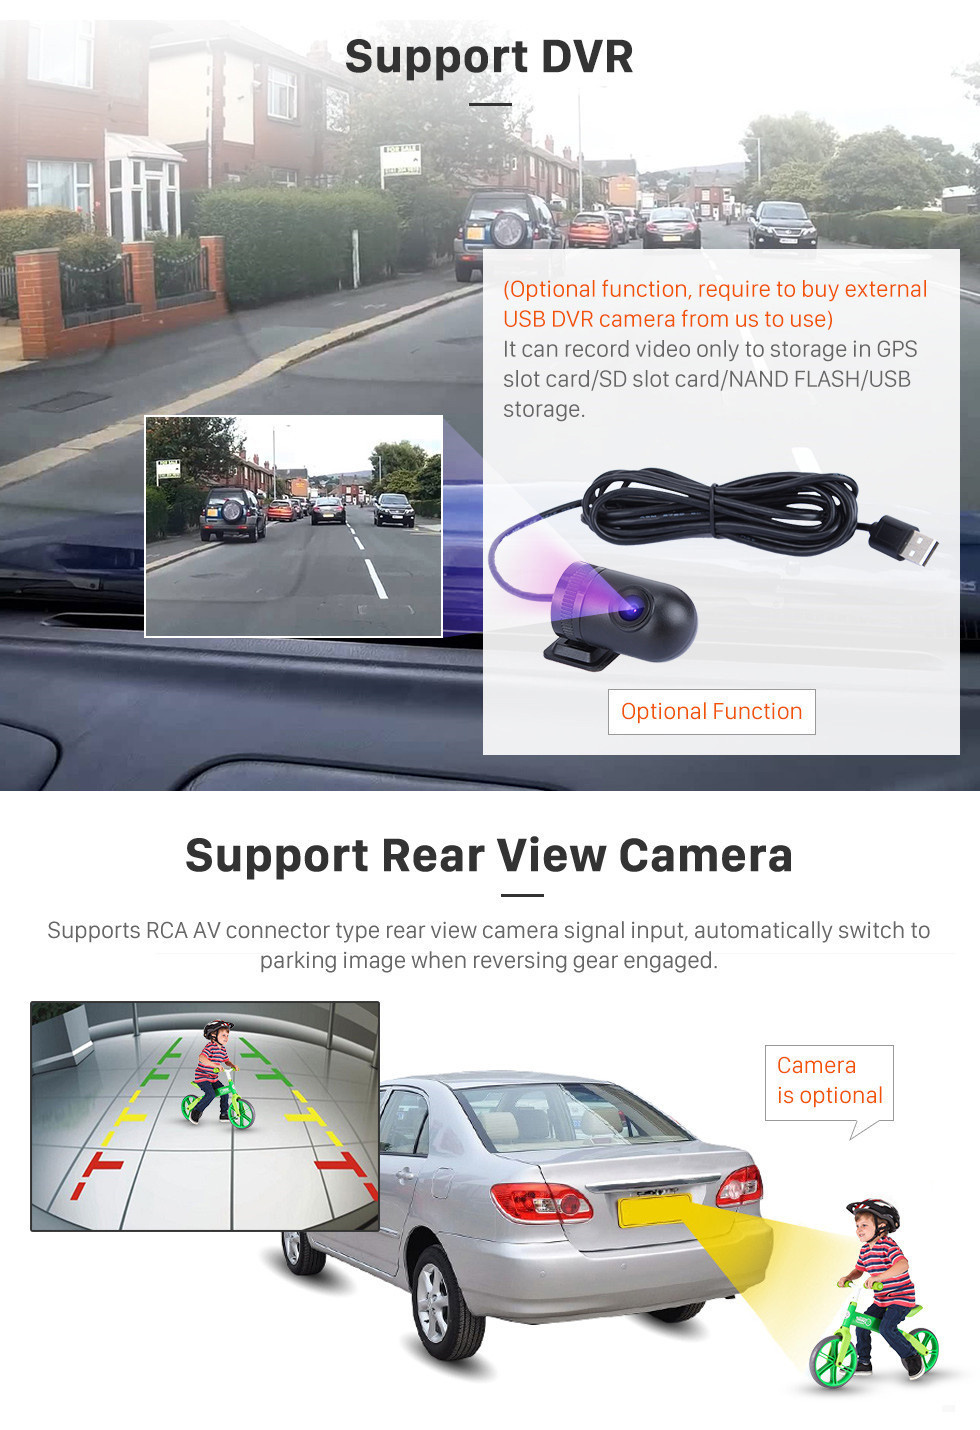 Seicane 10.1 polegada 2016-2018 VW Volkswagen Tiguan Android 11.0 Navegação GPS Rádio Bluetooth HD Touchscreen AUX USB Carplay suporte Mirror Link